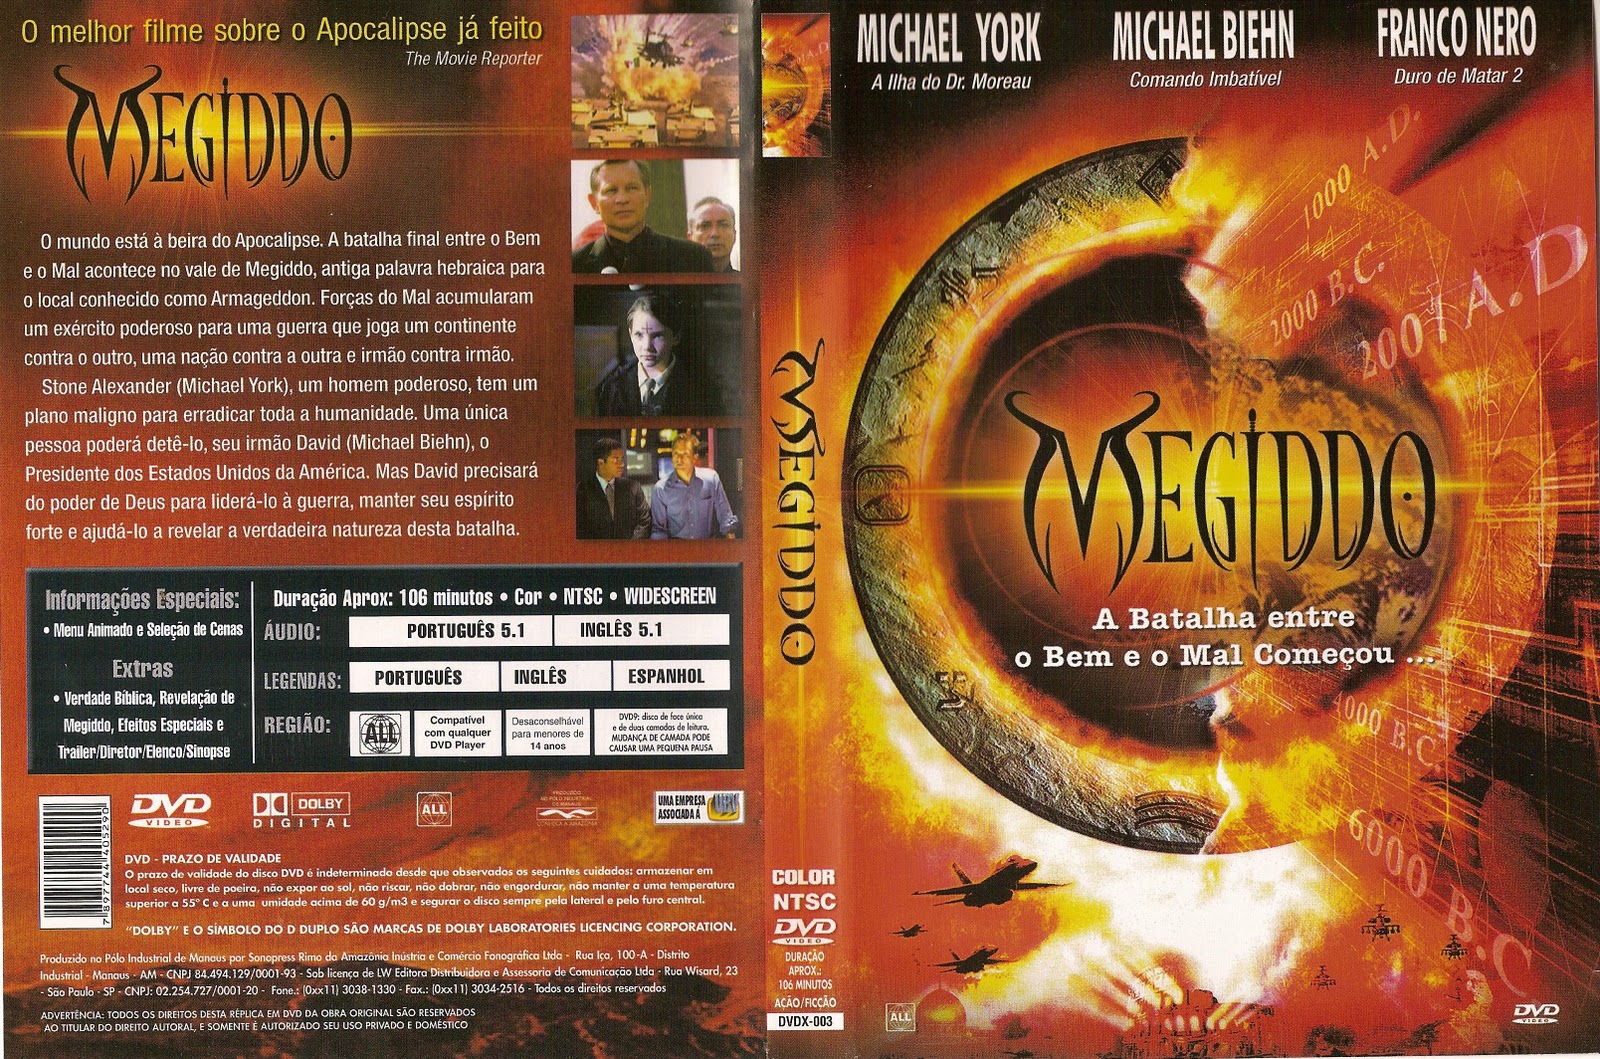 Megiddo - The Omega Code 2 - DVD Cover
Keywords: ;media_cover